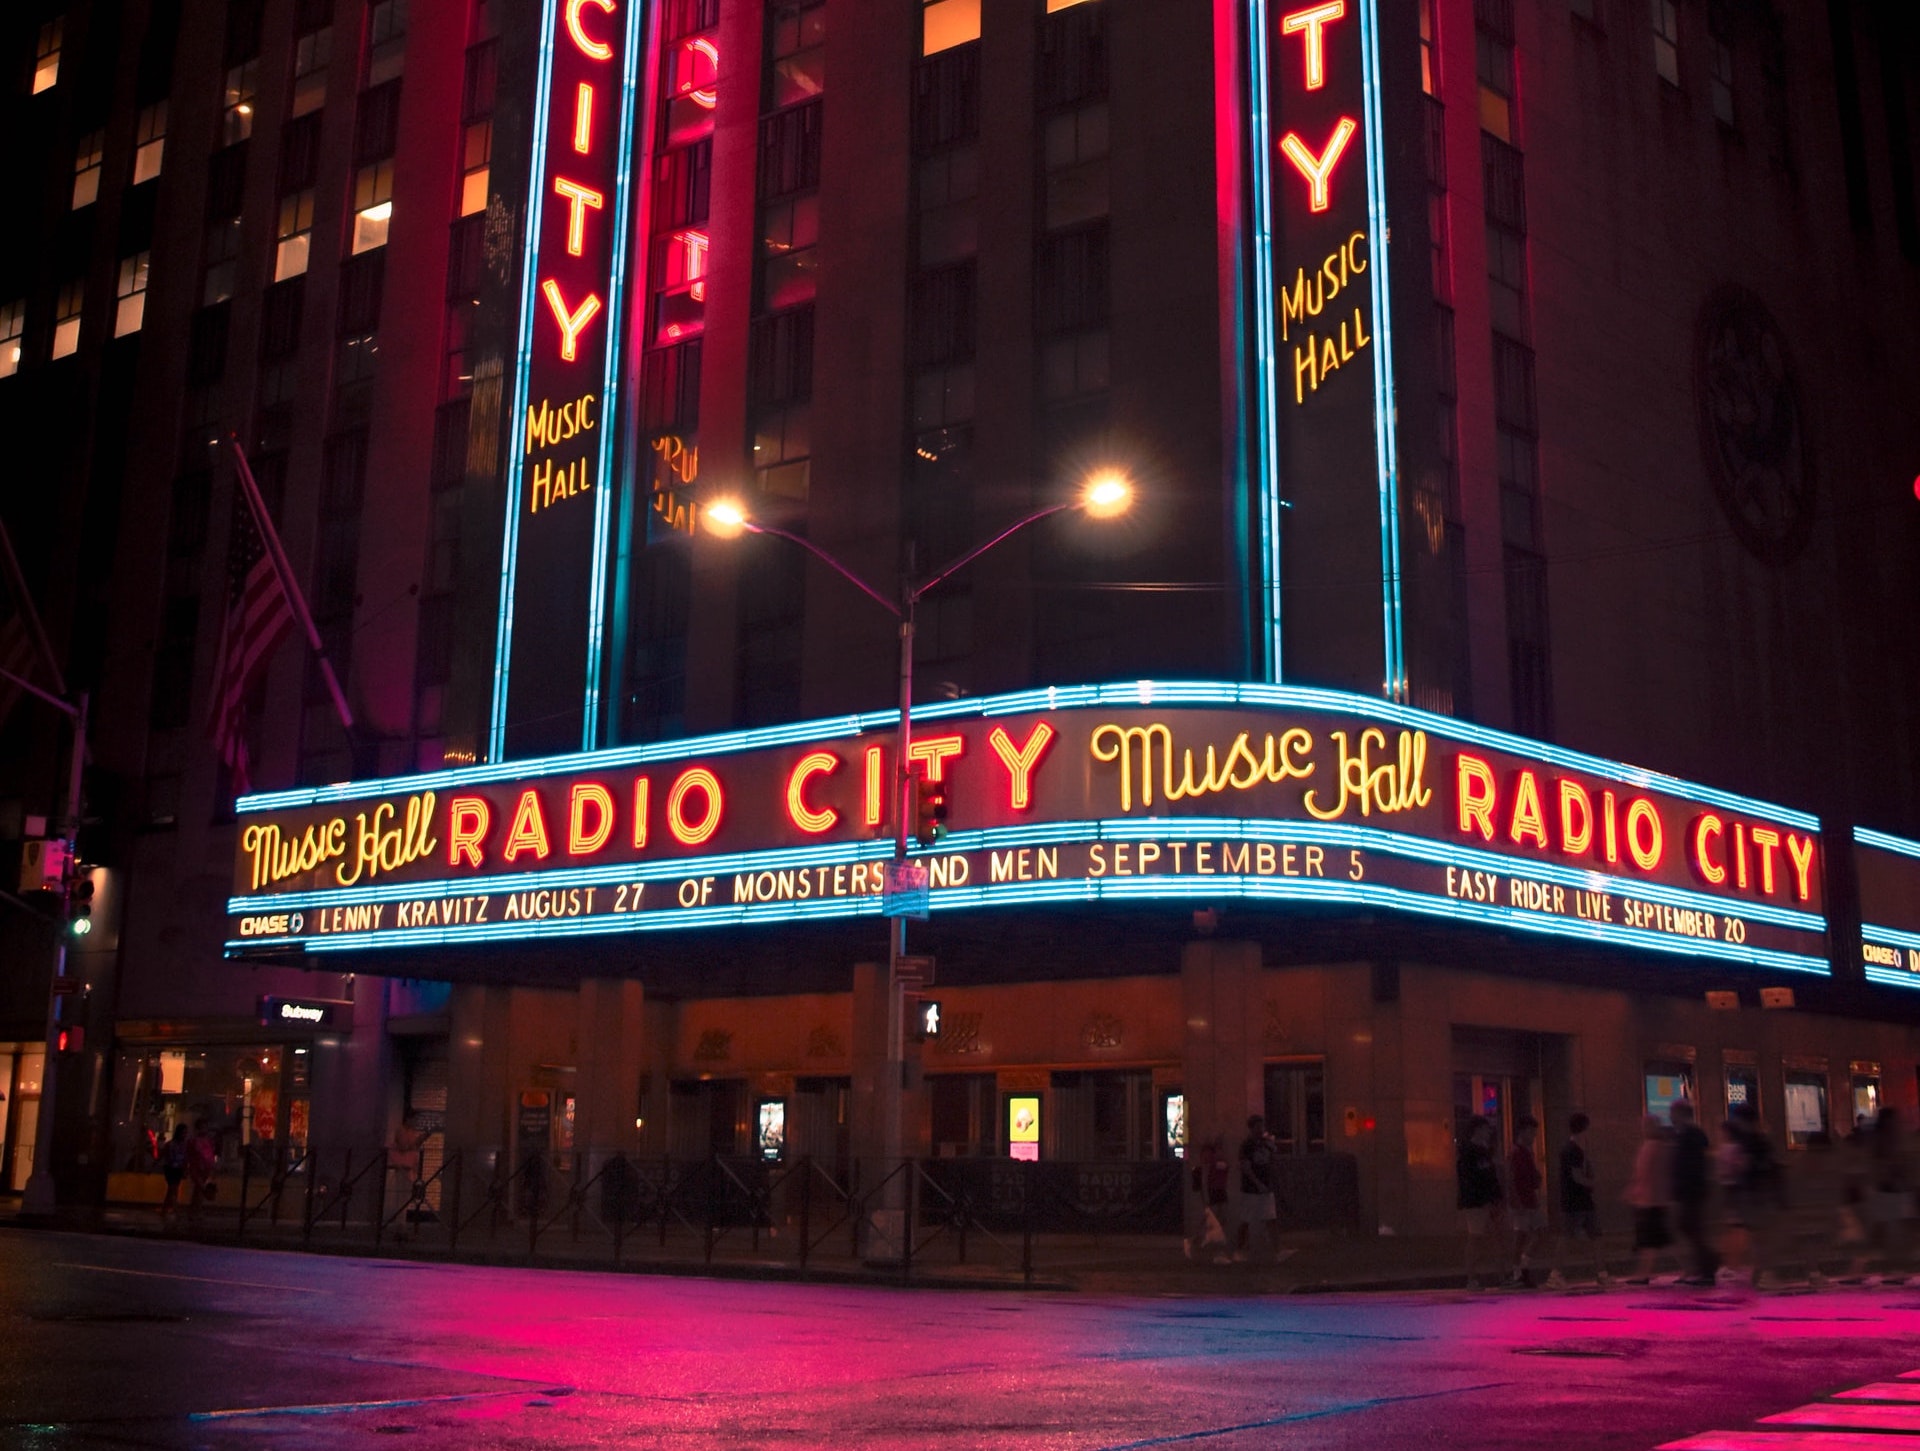 Radio City NYC at night